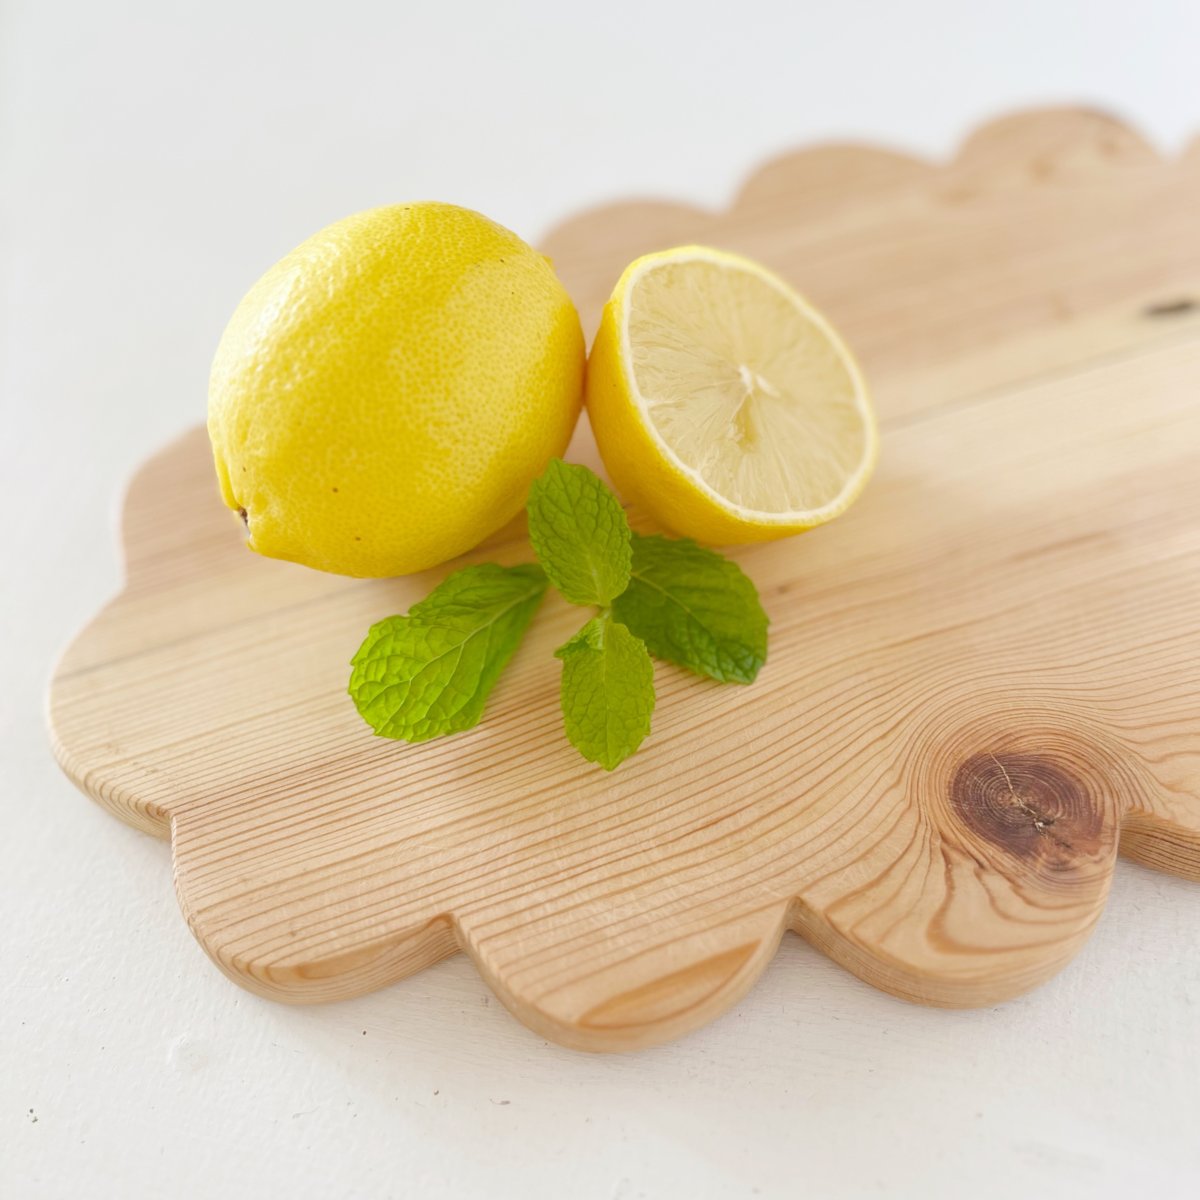 mondocherry - Ivy Alice | oval wooden serving board | scallops